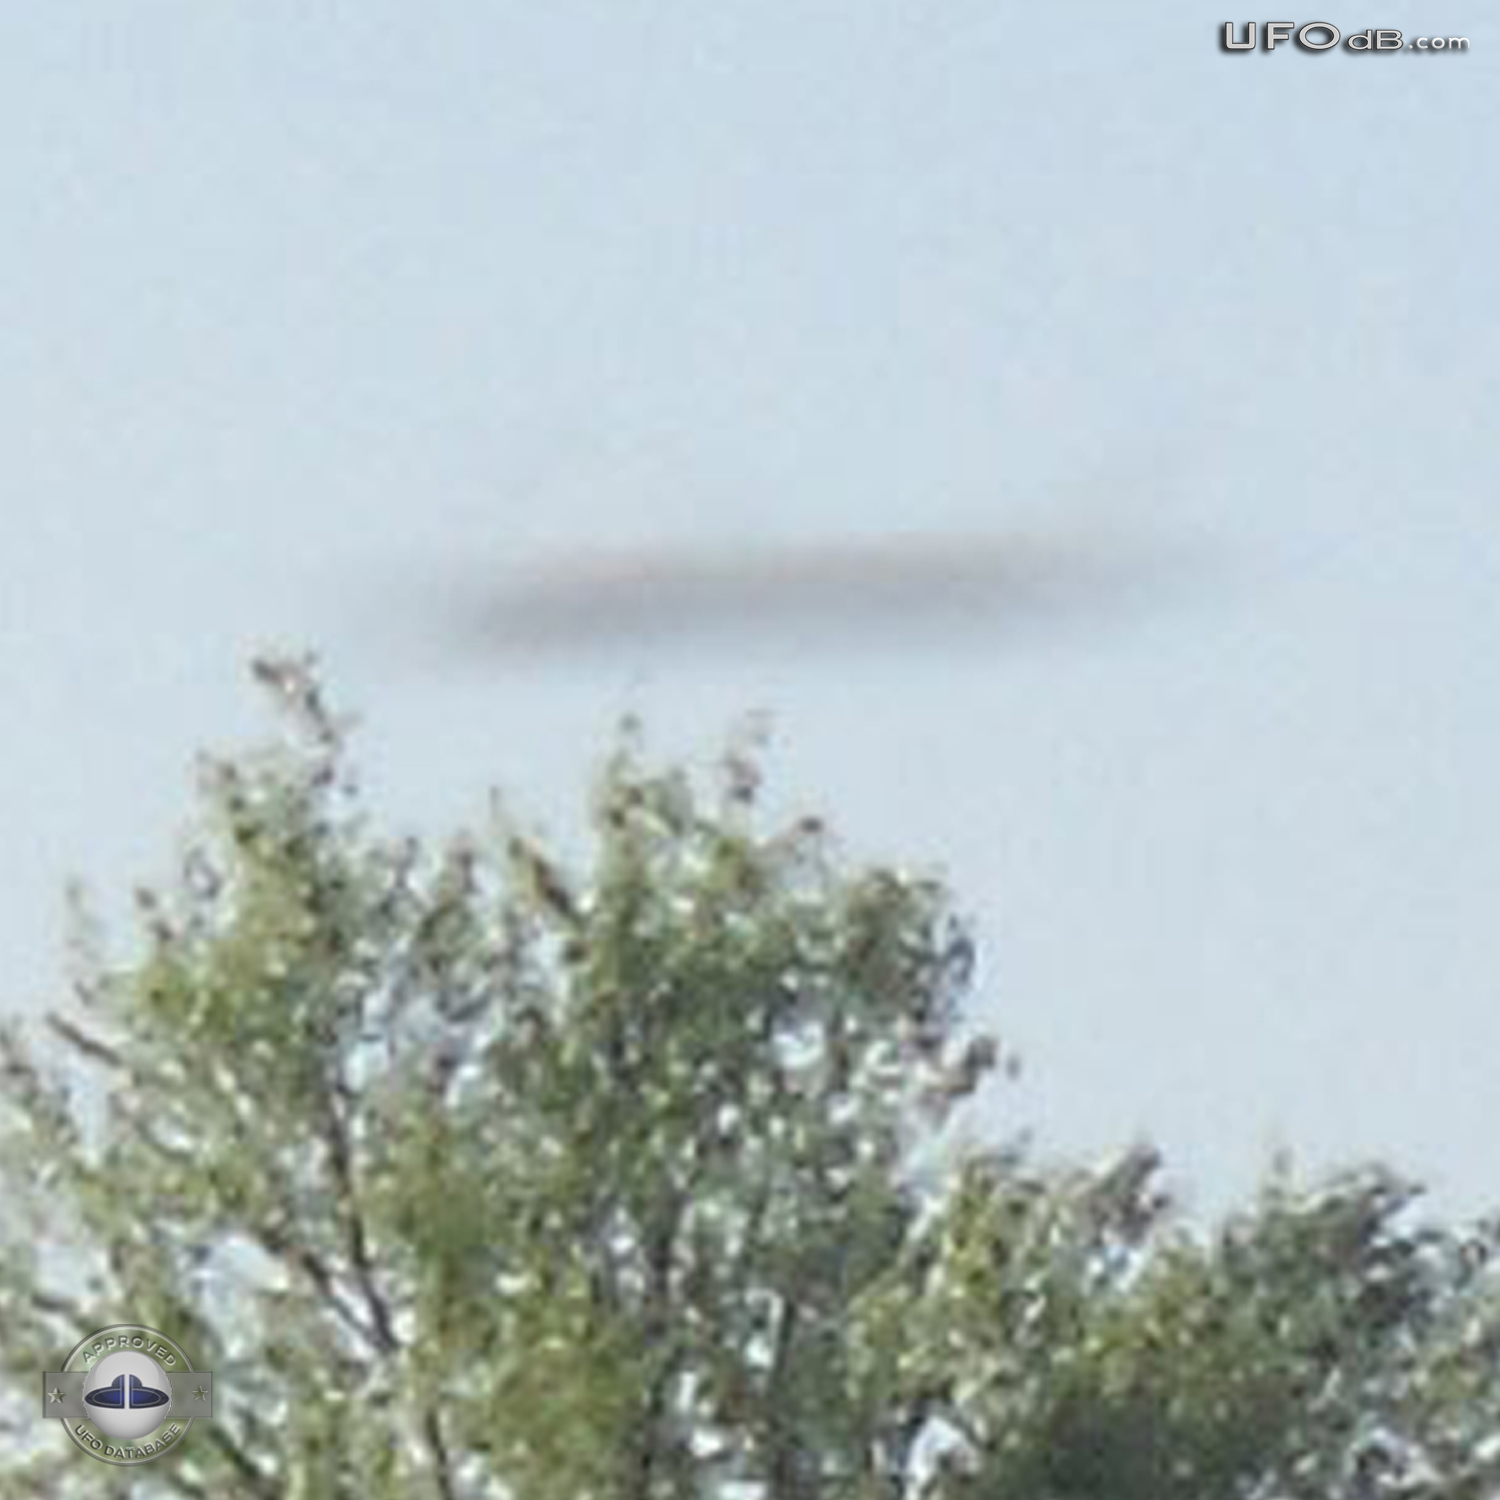 Bradley Ponds Fisherman UFO picture | Lincolnshire UK | April 23 2011 UFO Picture #301-4